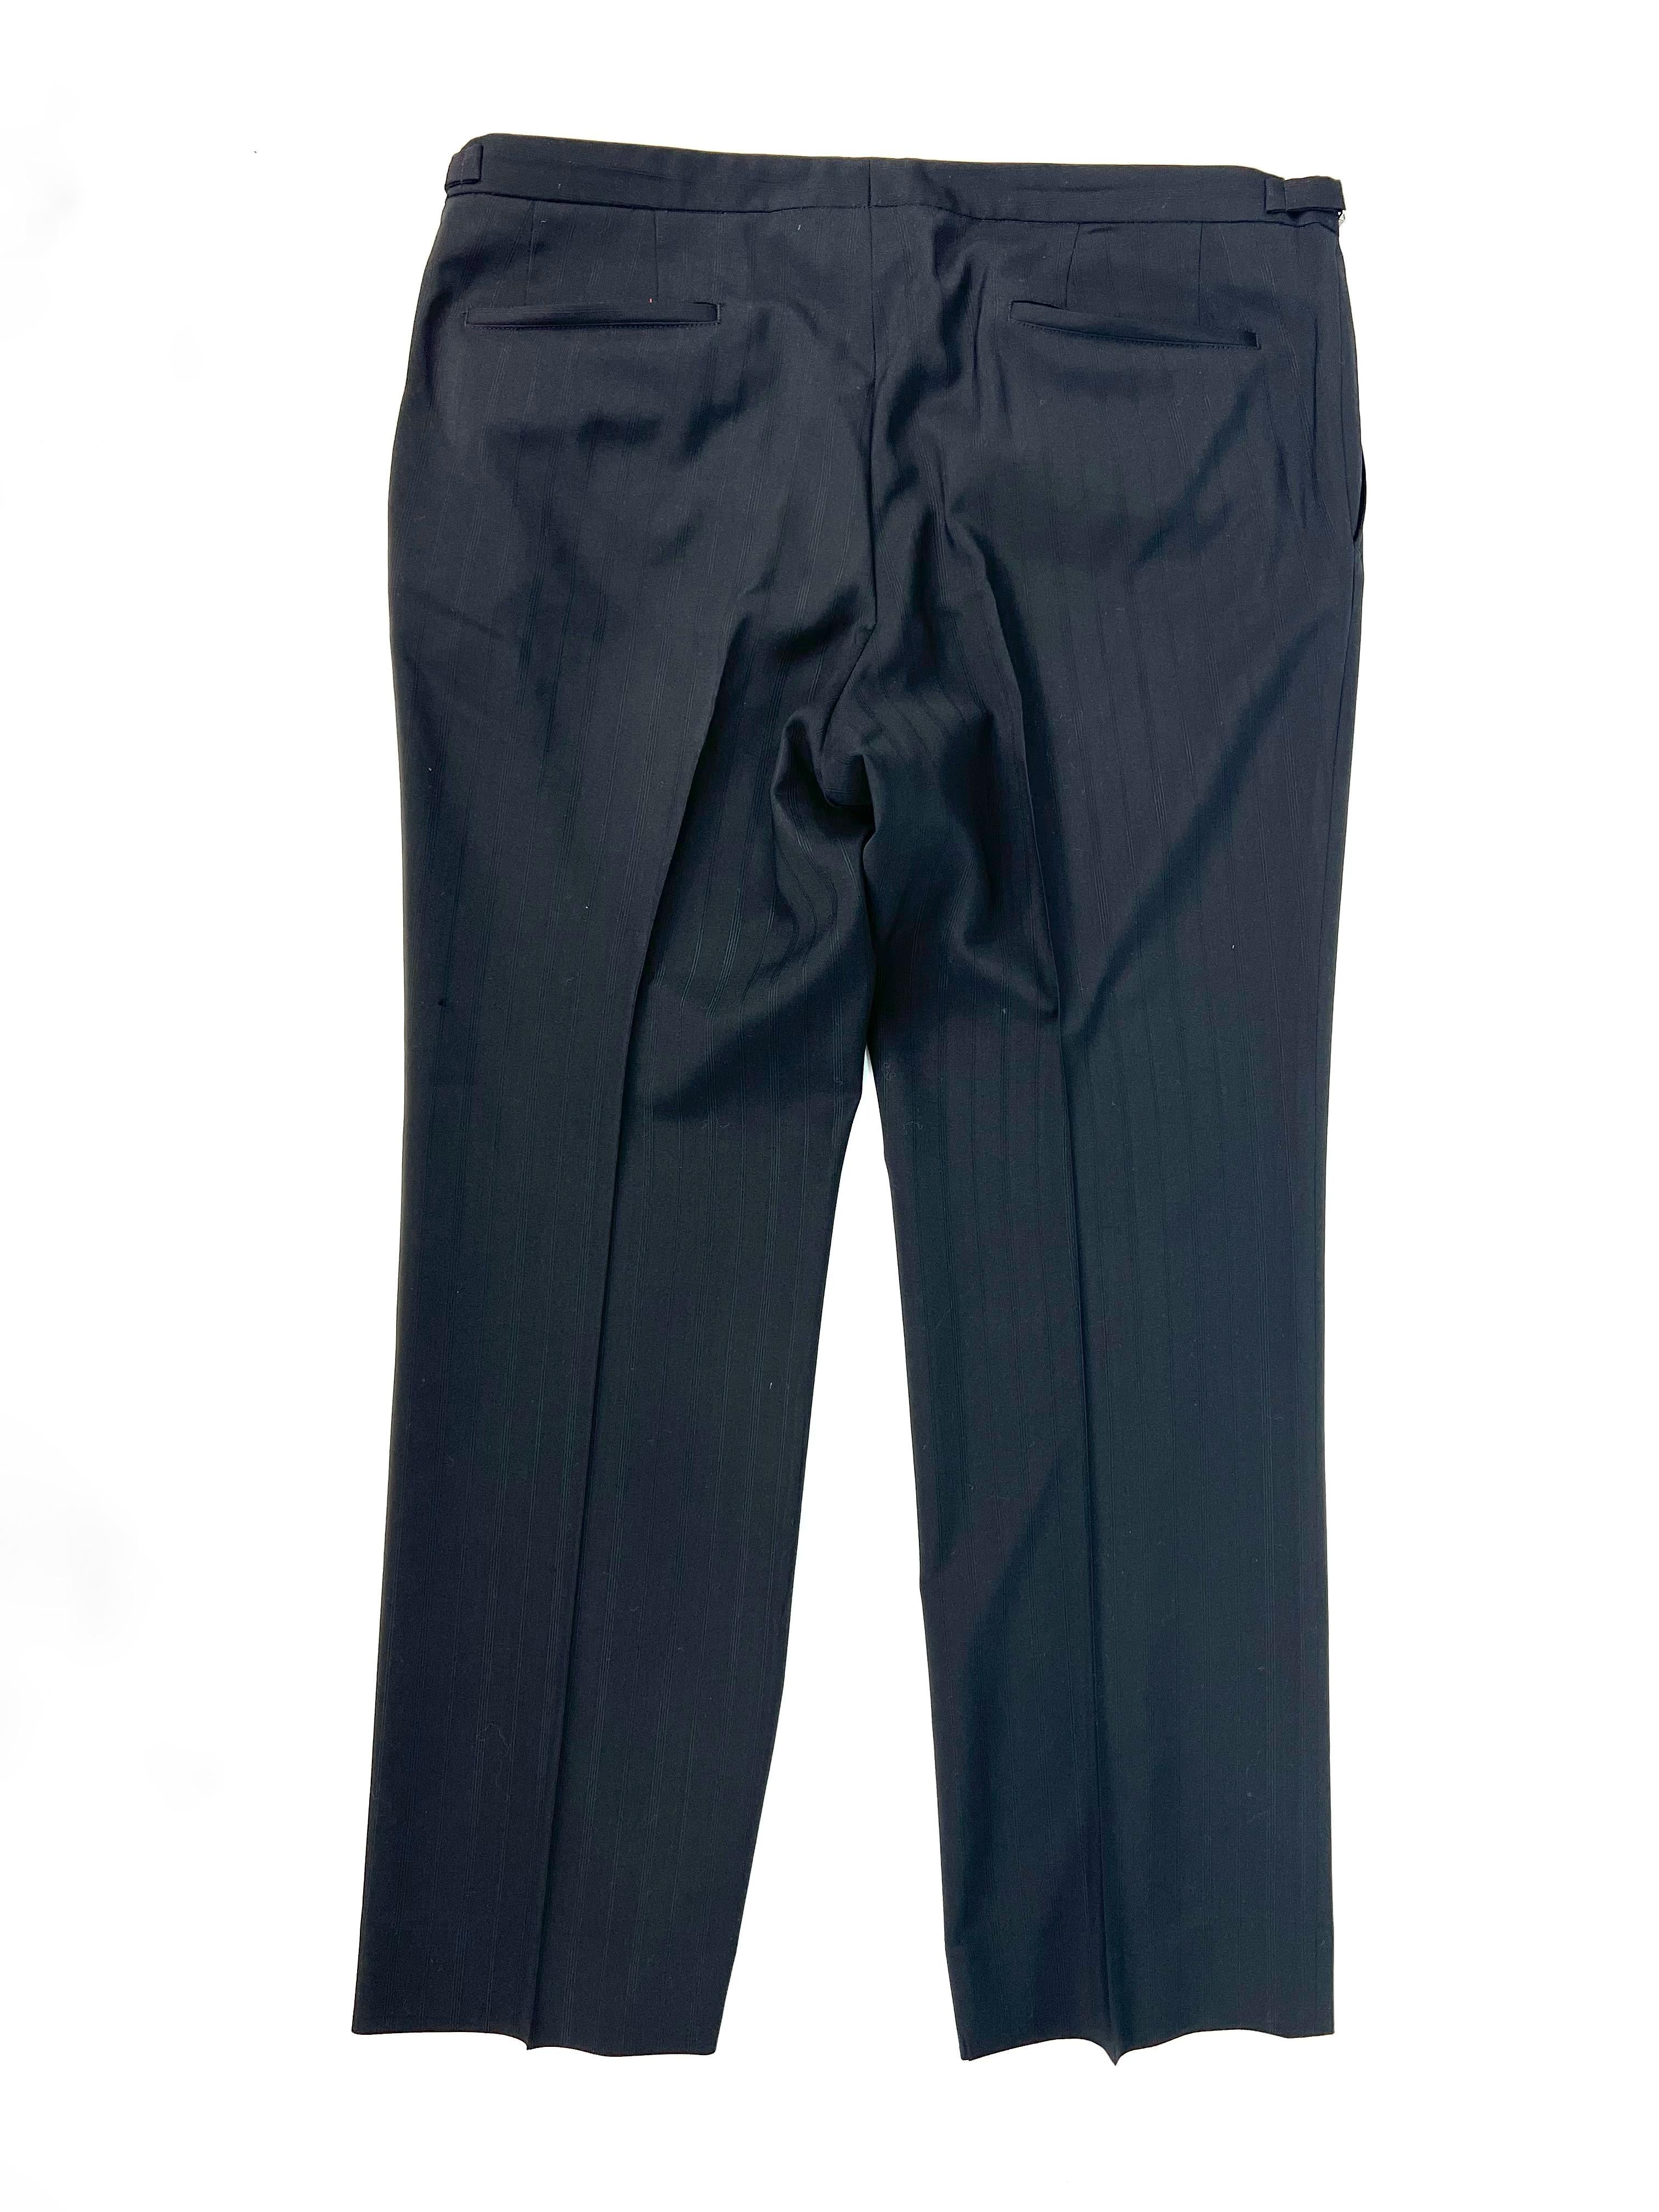 Hugo Boss Black Wool Trousers Pants, Size 38 For Sale 3